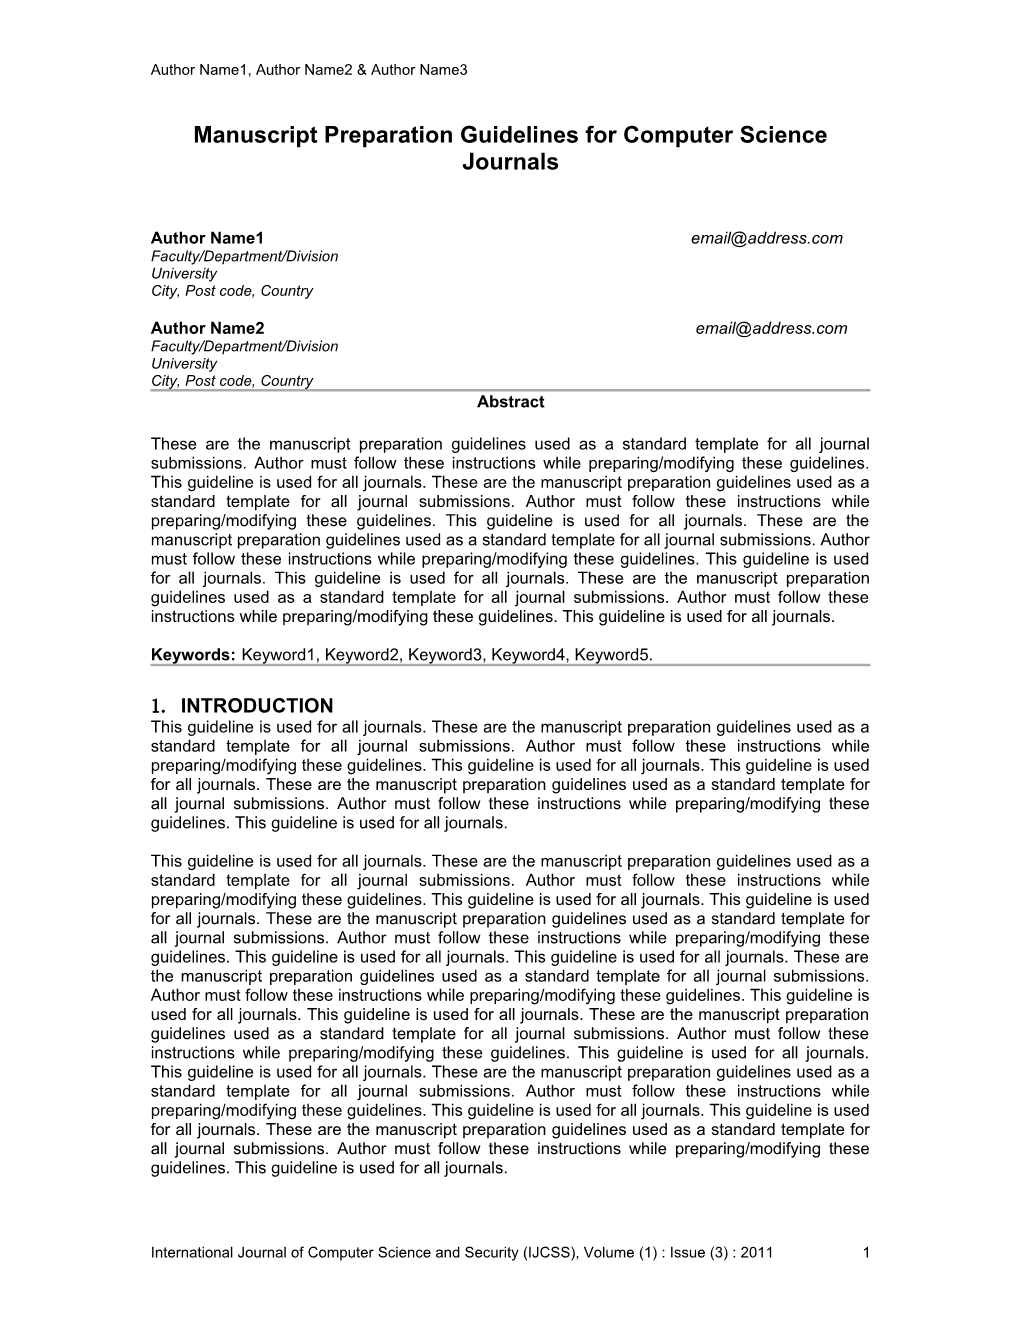 Manuscript Preparation Guidelines for Computer Science Journals